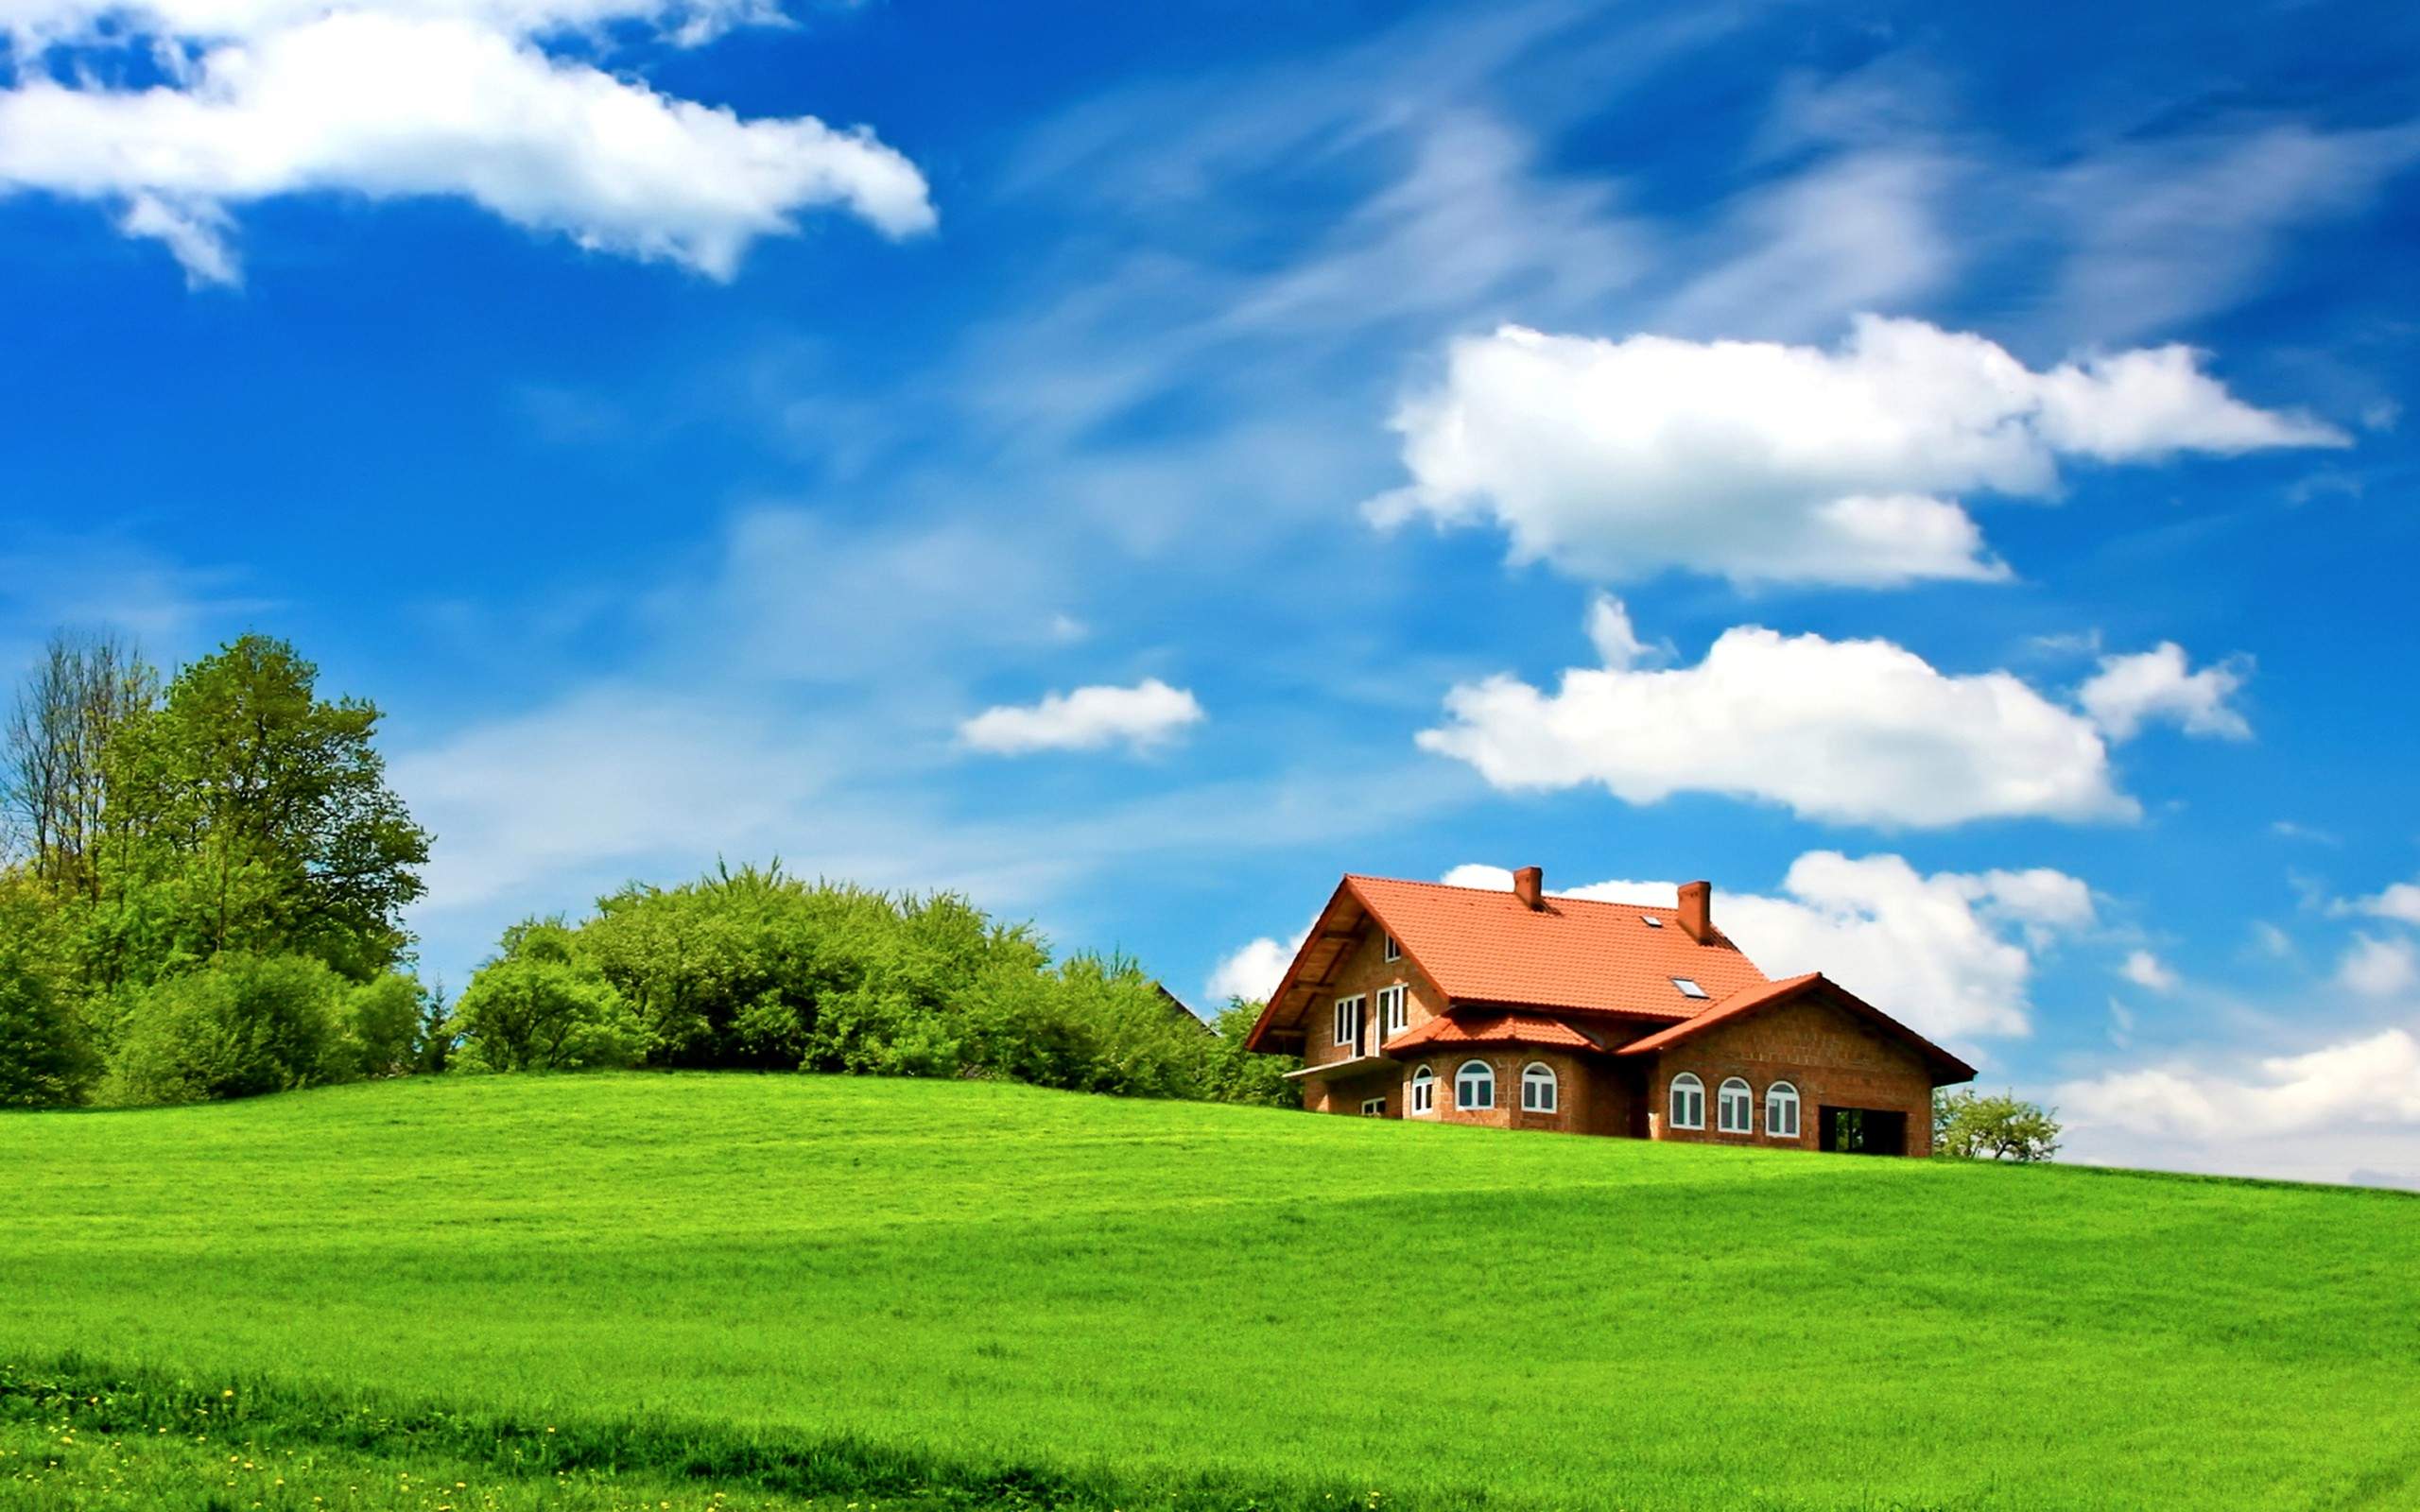 Green Field House Landscape Wallpaper For Desktop High Quality